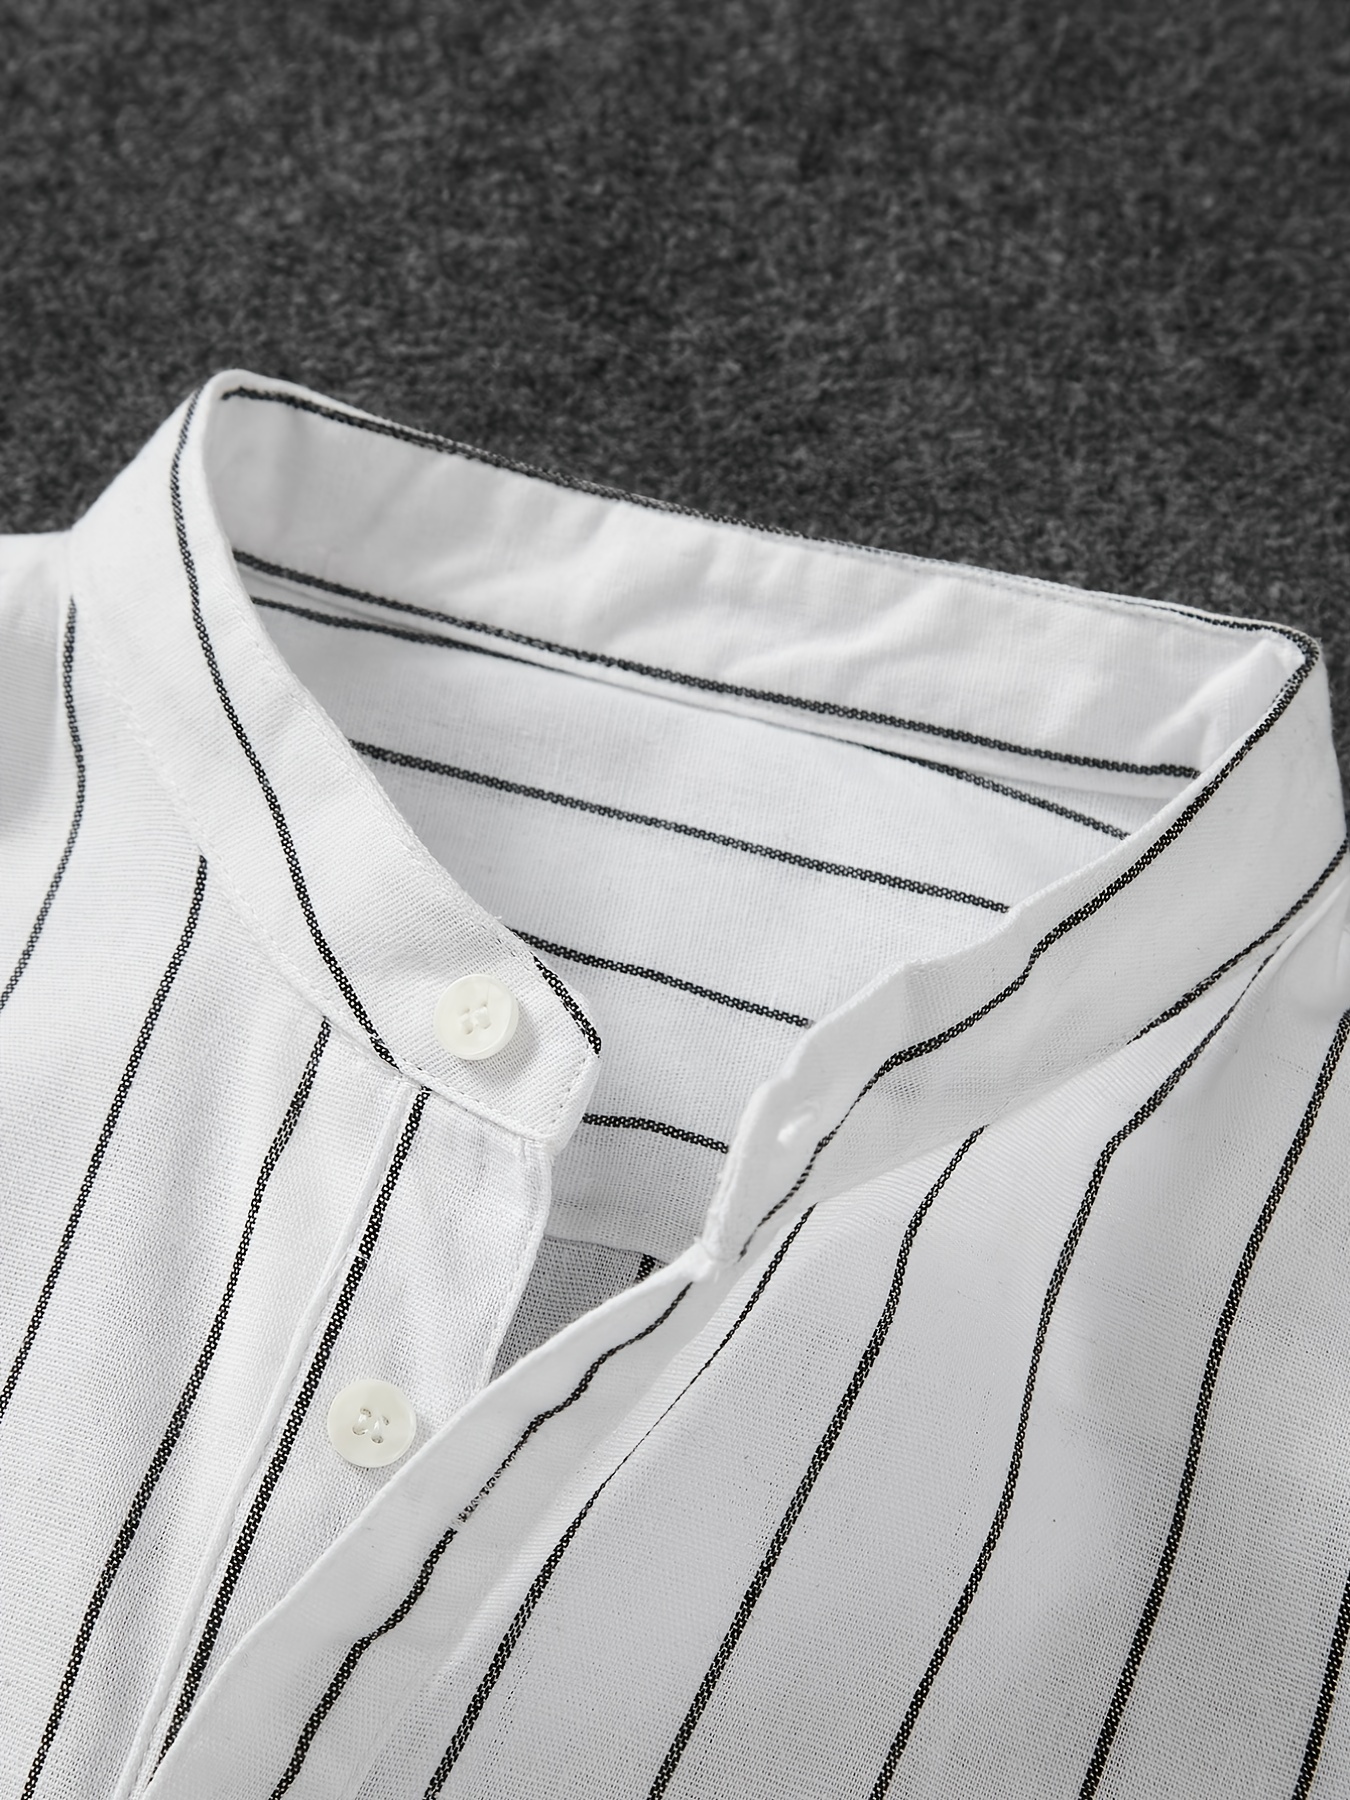 Mandarin Collar Men's Casual Button-Up Shirts